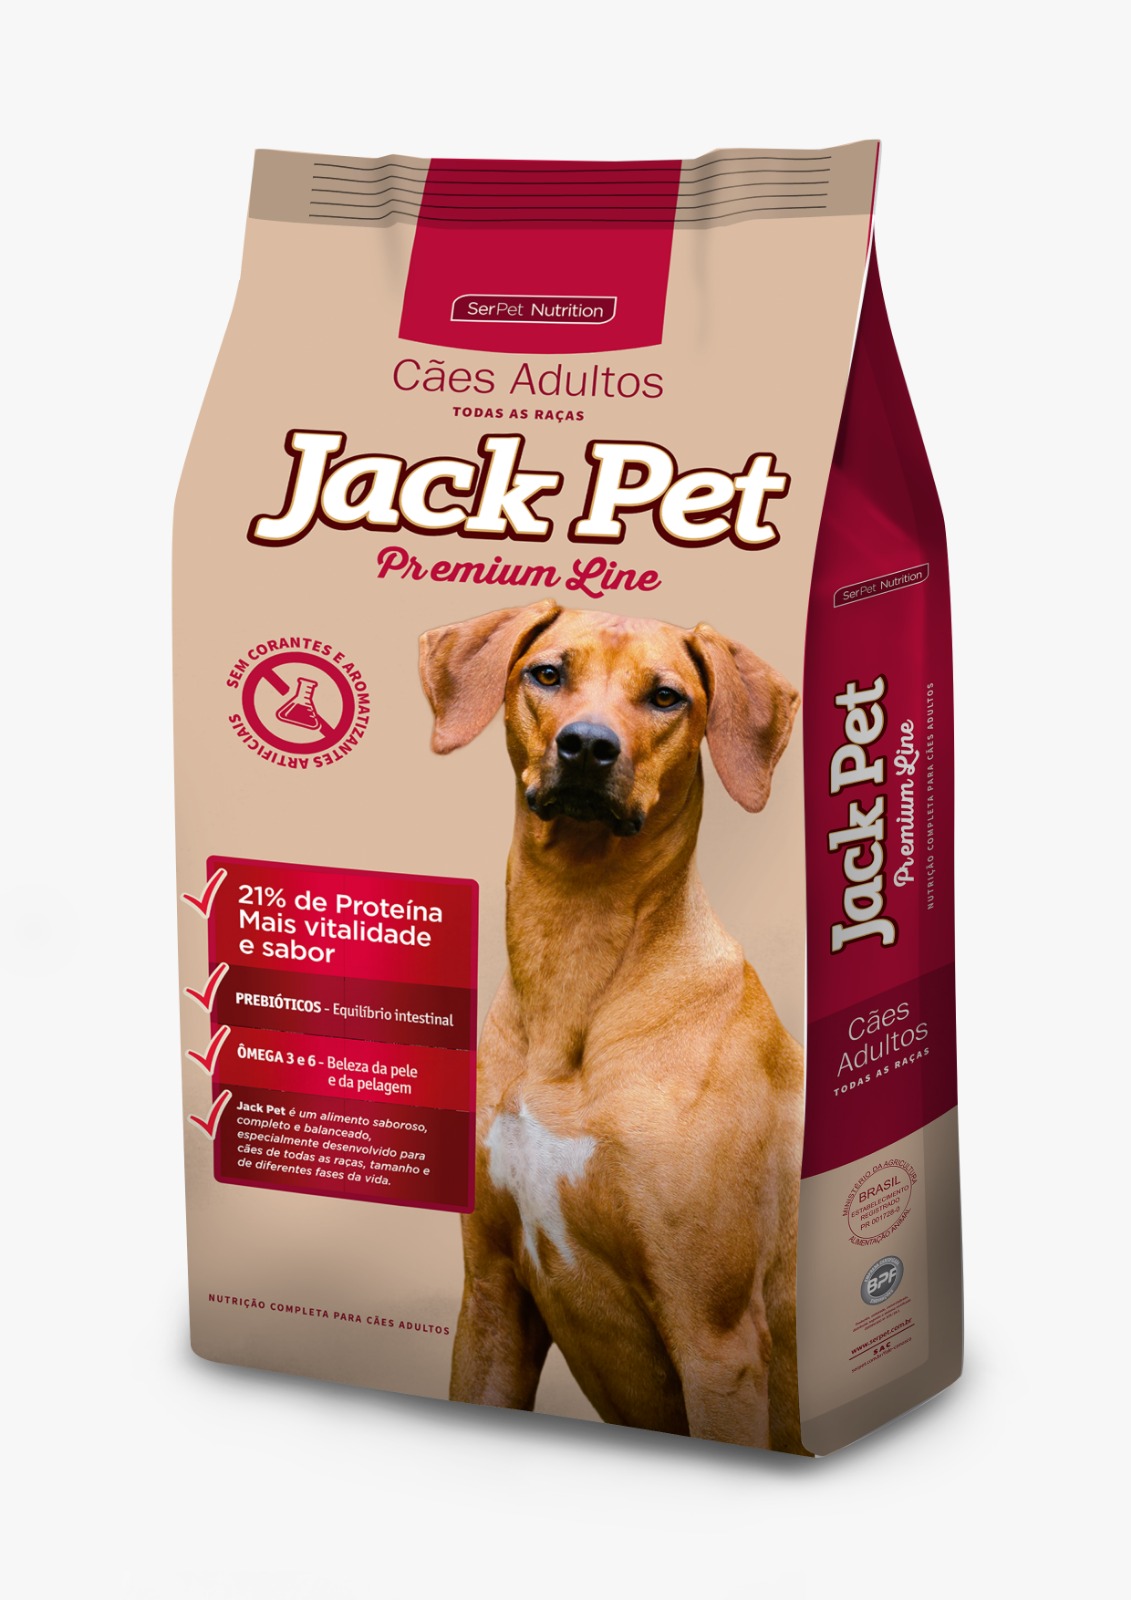 Jack Pet - Adultos Todas as Raças